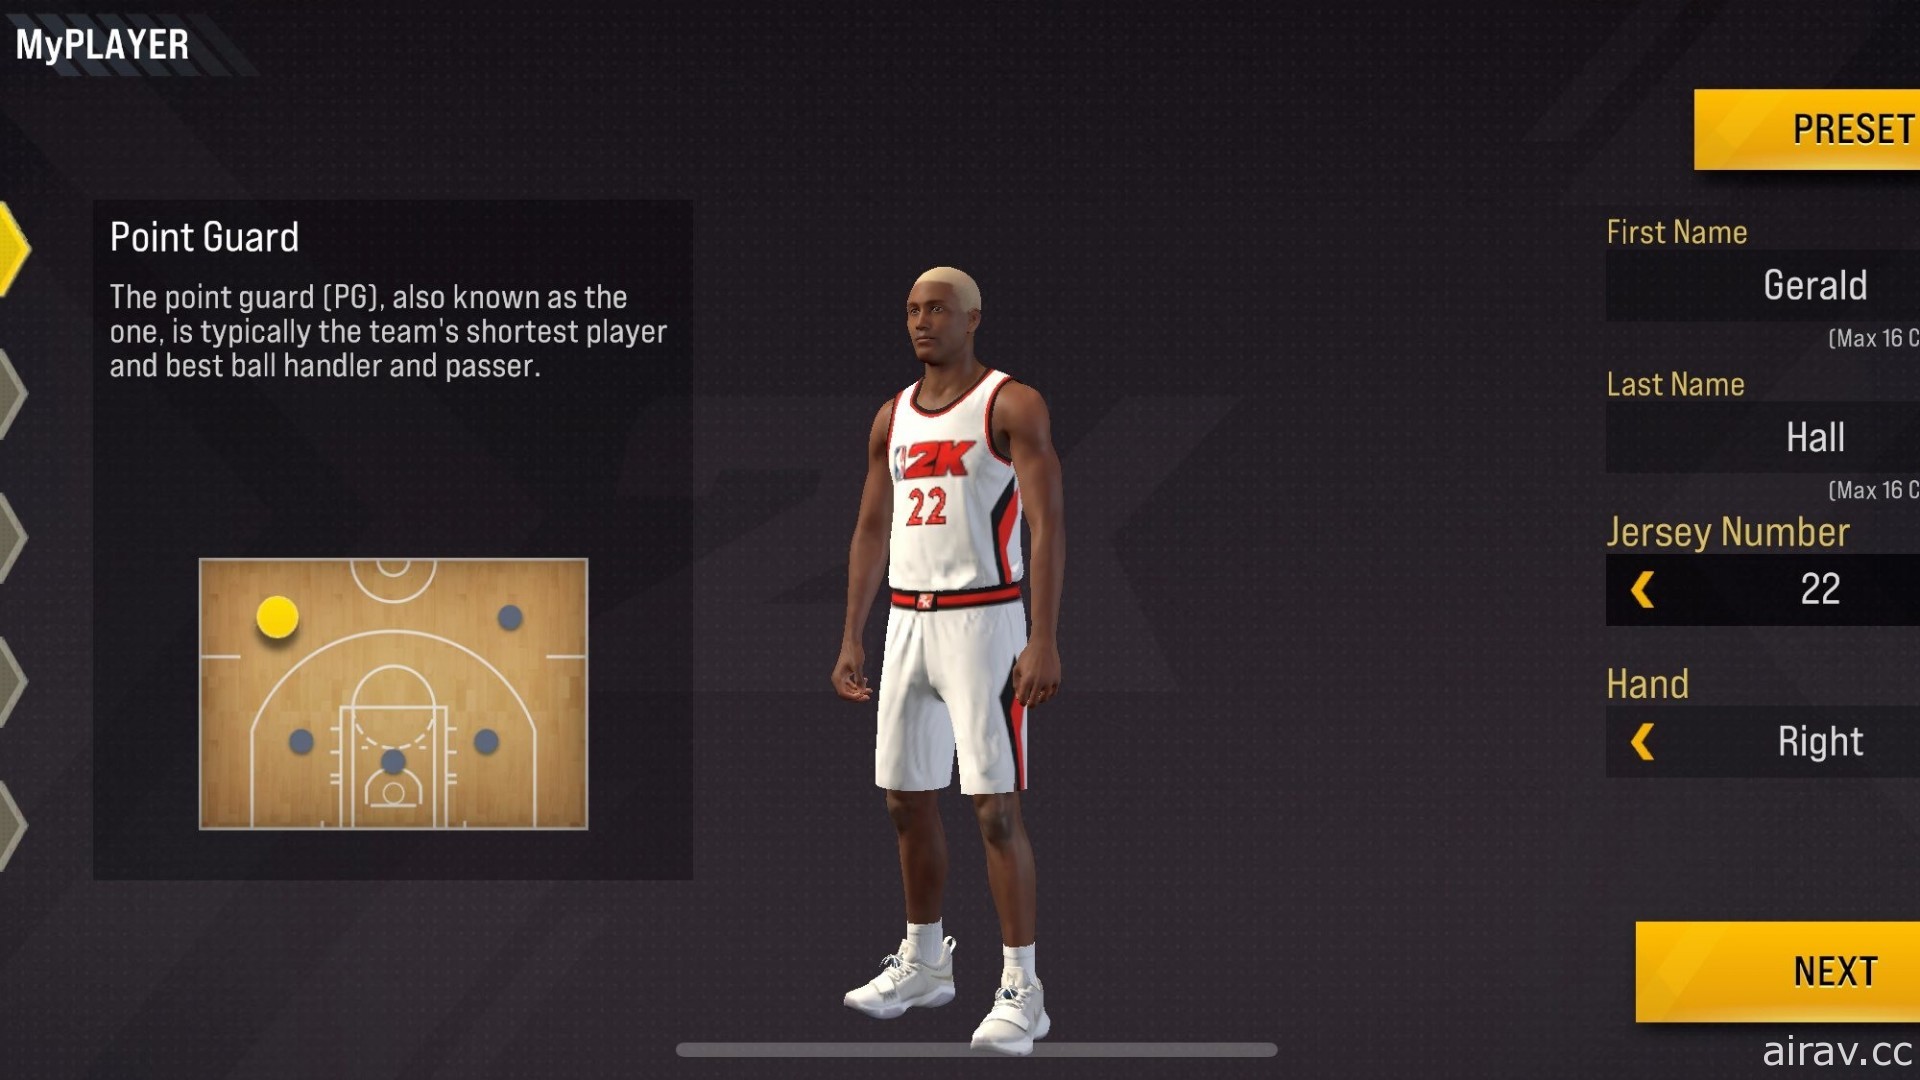 《NBA 2K22》Arcade 版即將在 Apple Arcade 上架 與 NBA 頂尖球星同場飆球